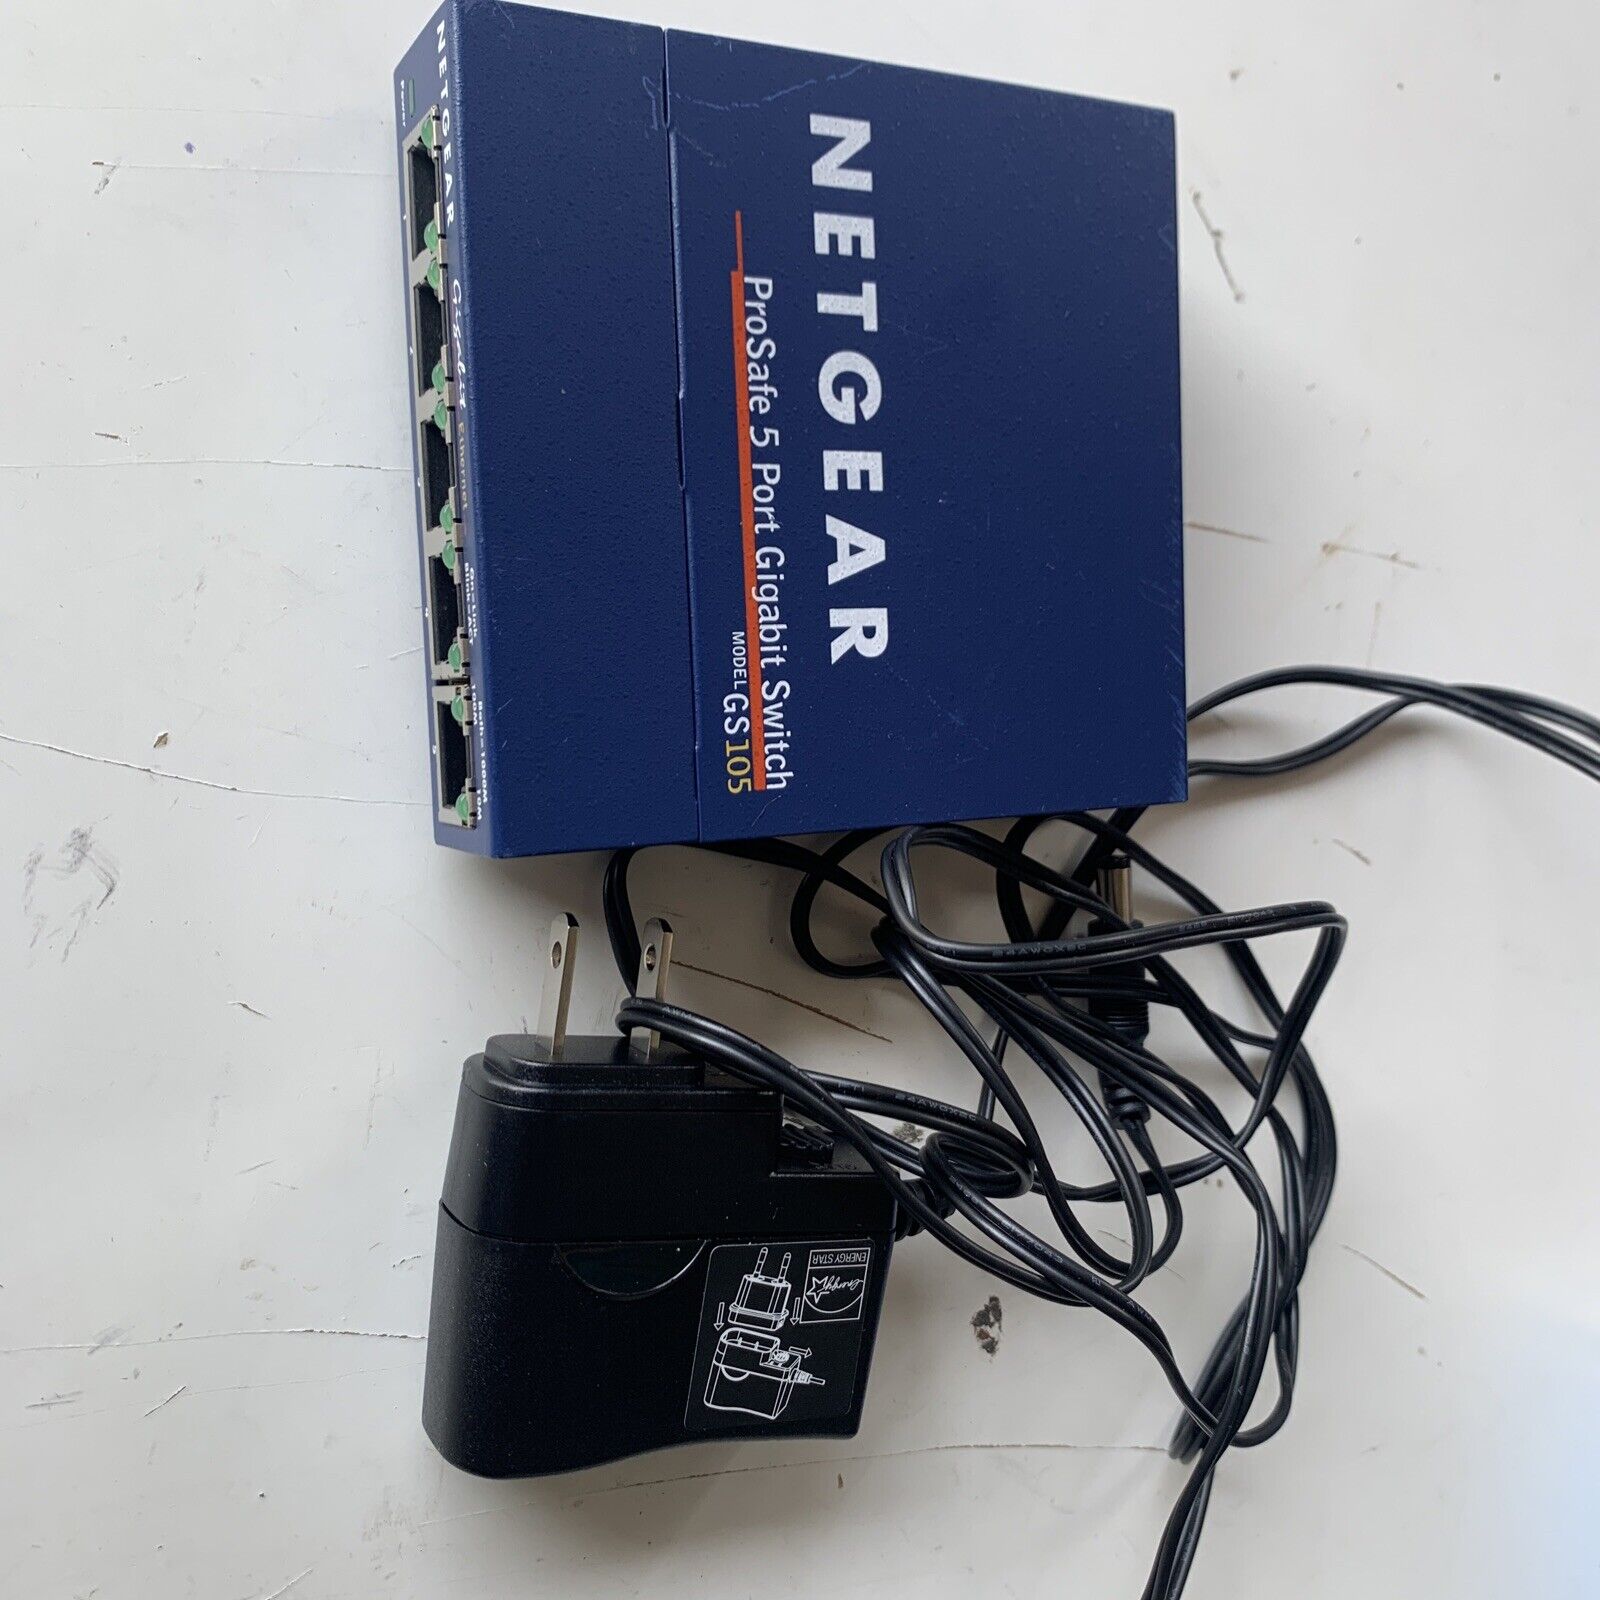 Netgear GS105 V5 Prosafe 5 Port Gigabit Switch WITH POWER ADAPTER 